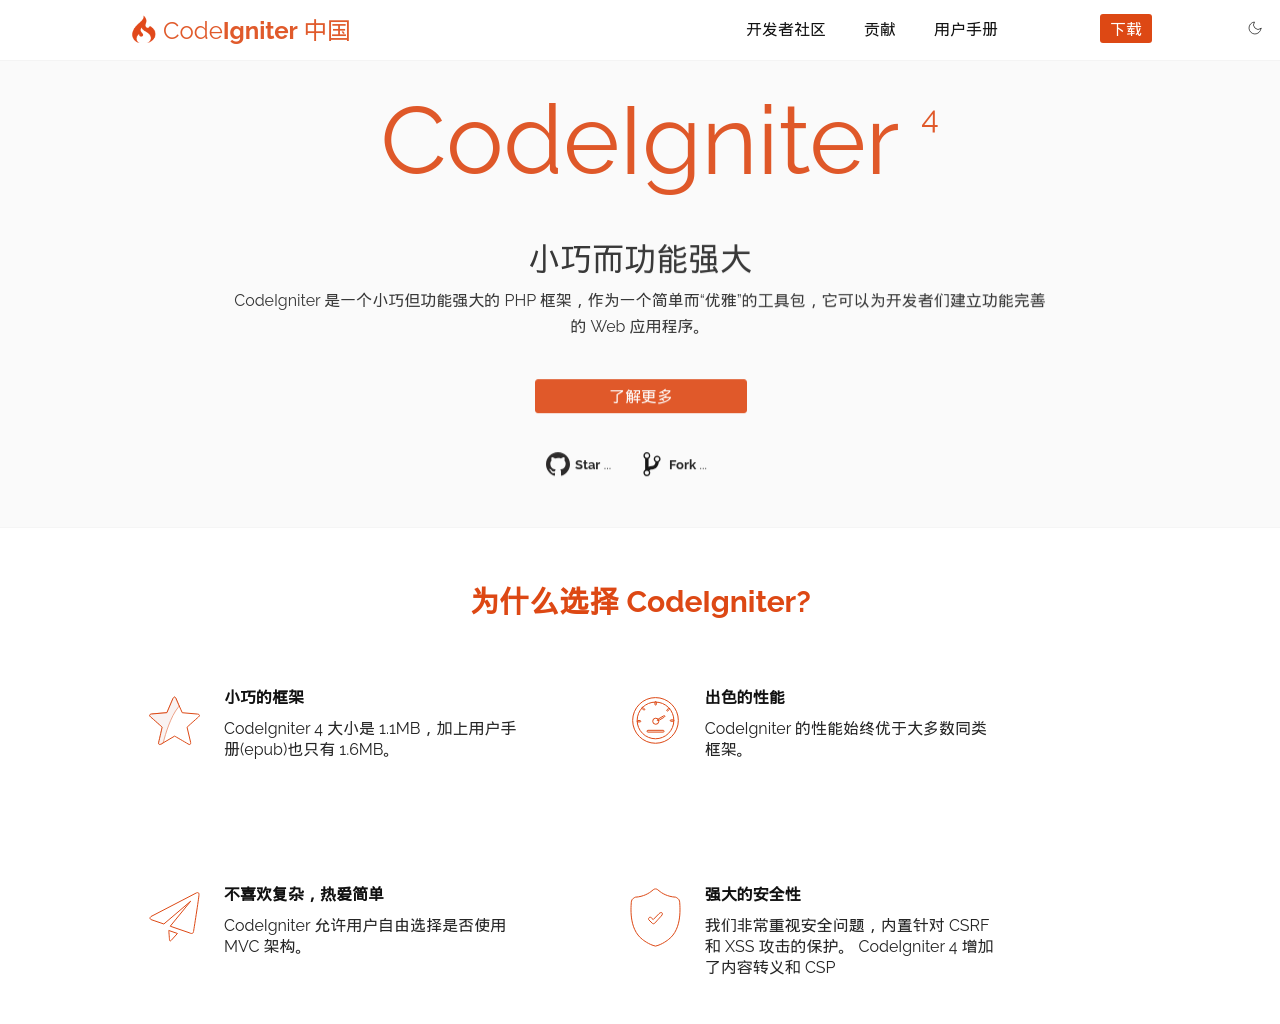 codeigniter.org.cn